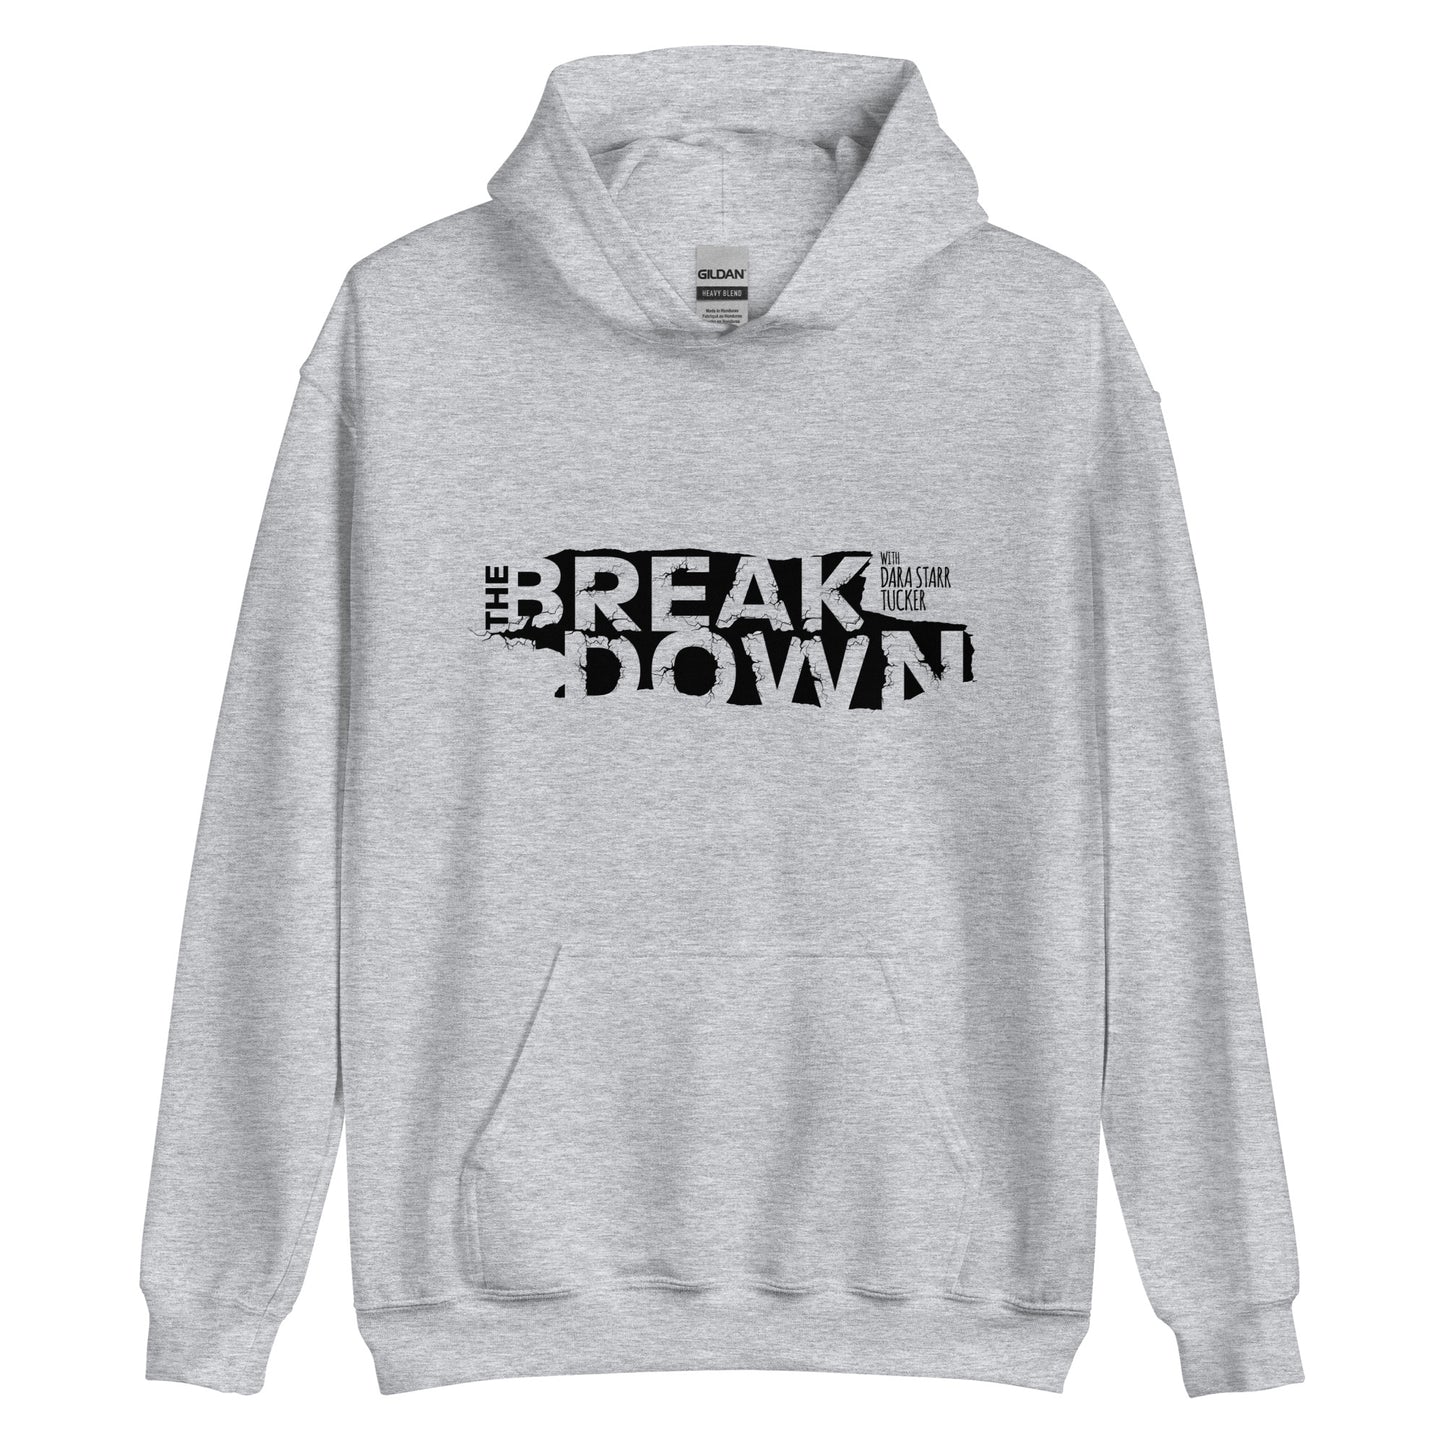 'The Breakdown' Unisex Hoodie - White/Gray